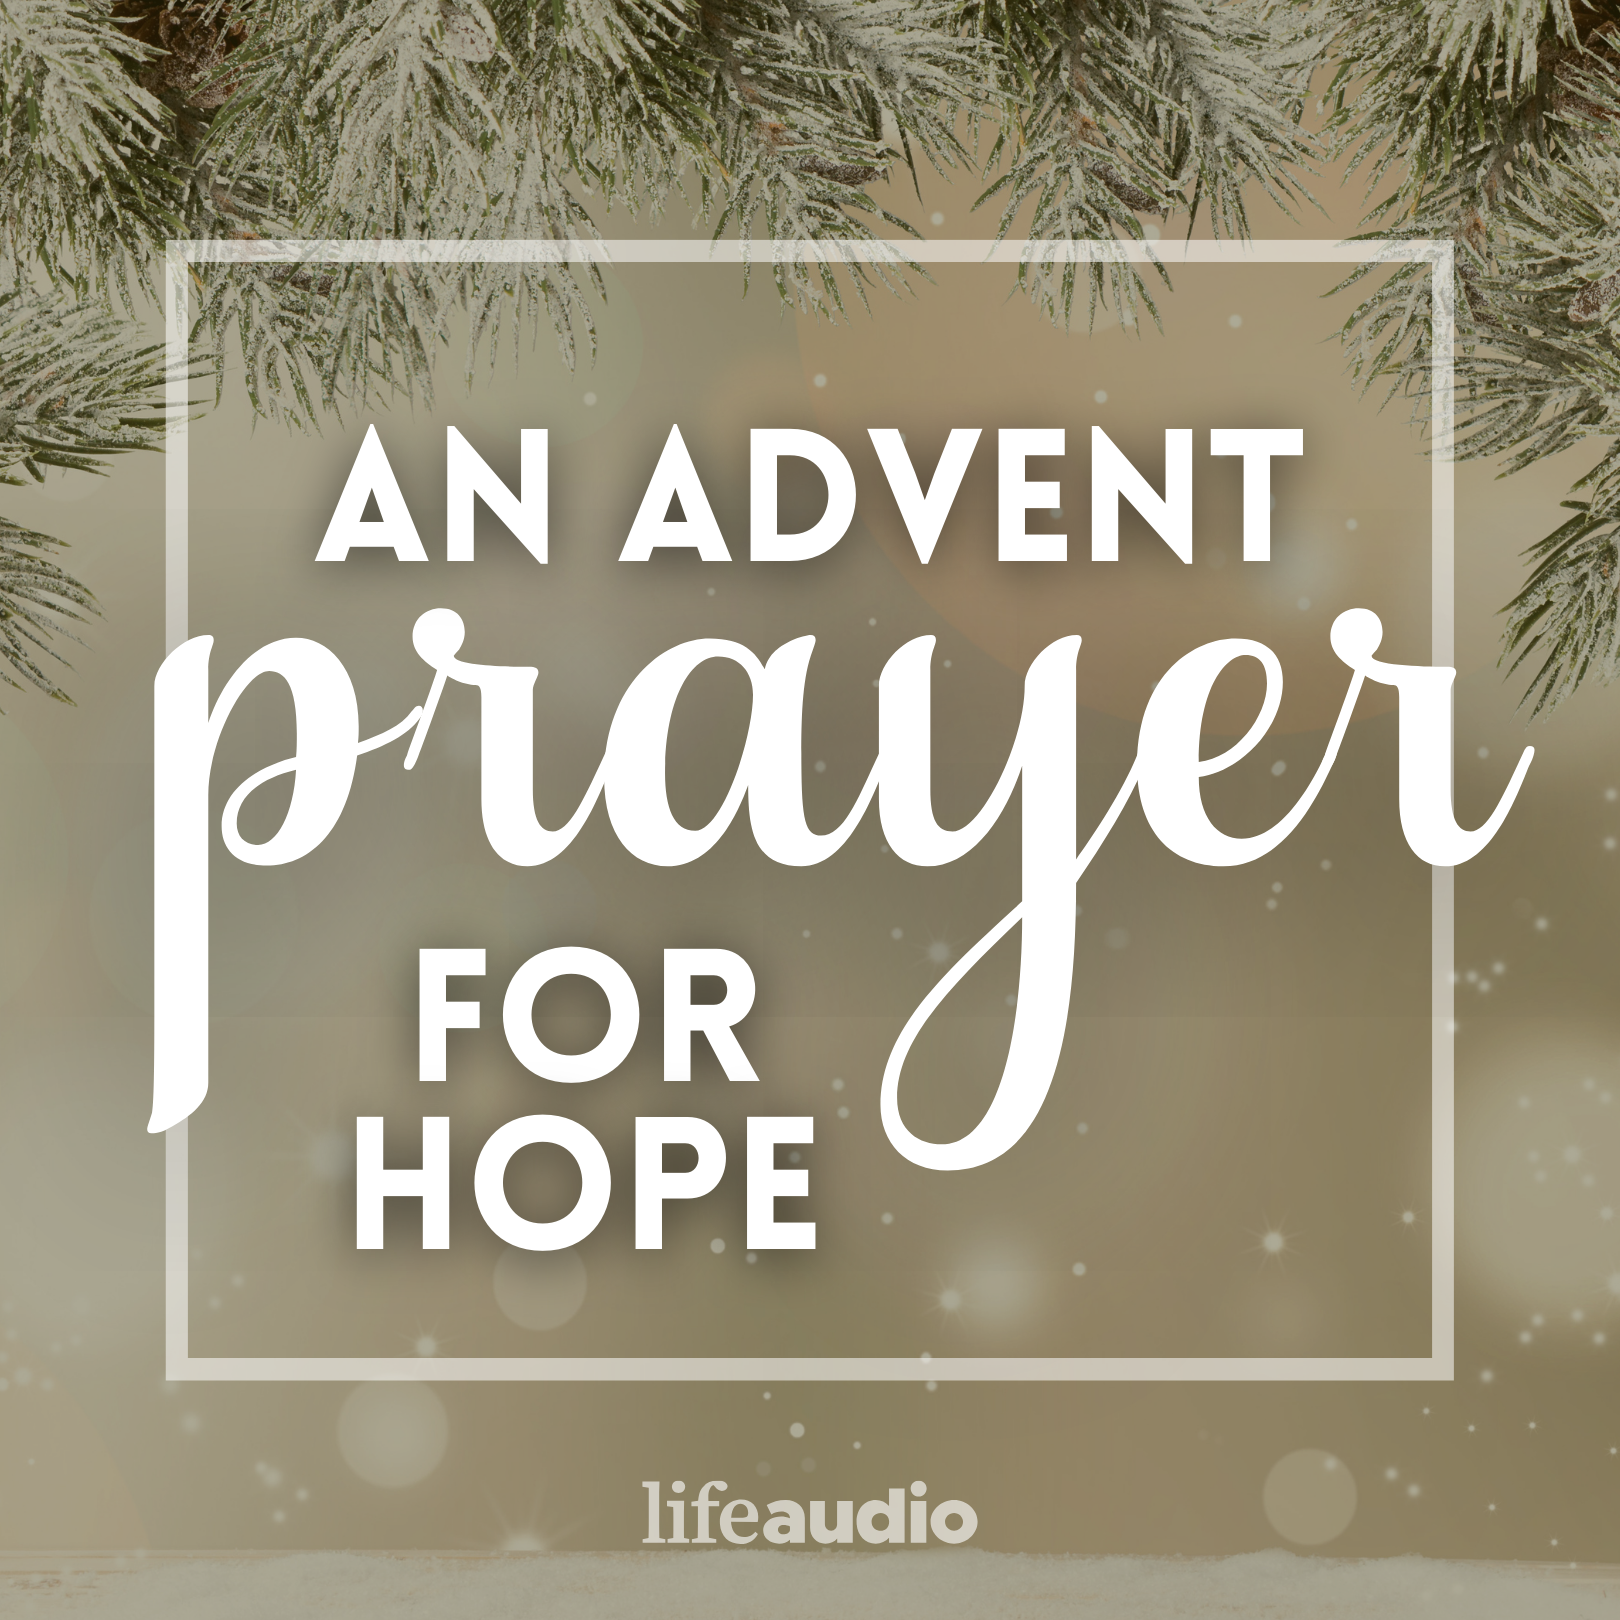 An Advent Prayer for Hope